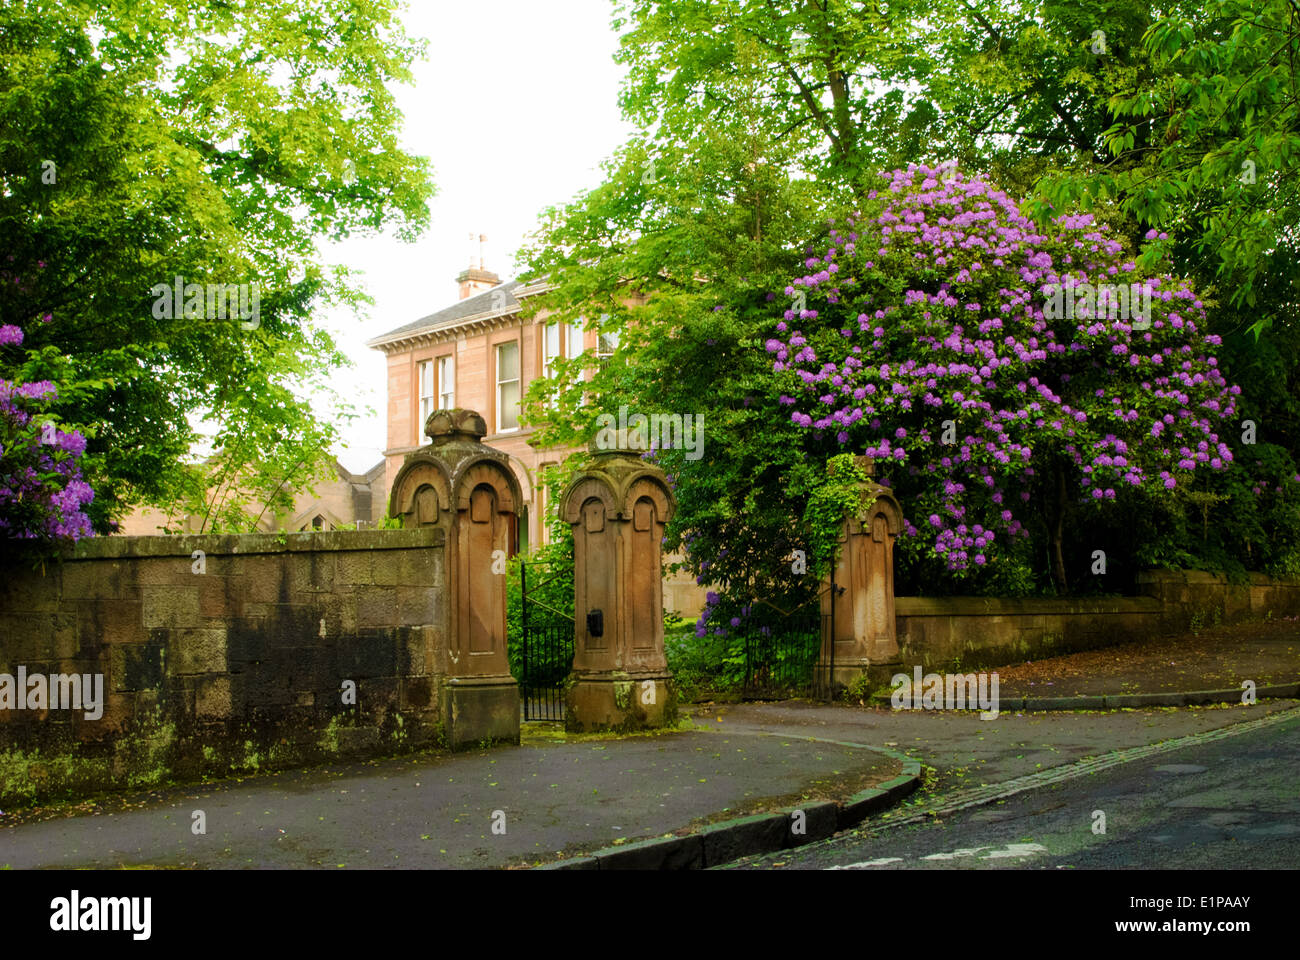 Typical British mansion. Big rhododendron bush near the gates Stock Photo